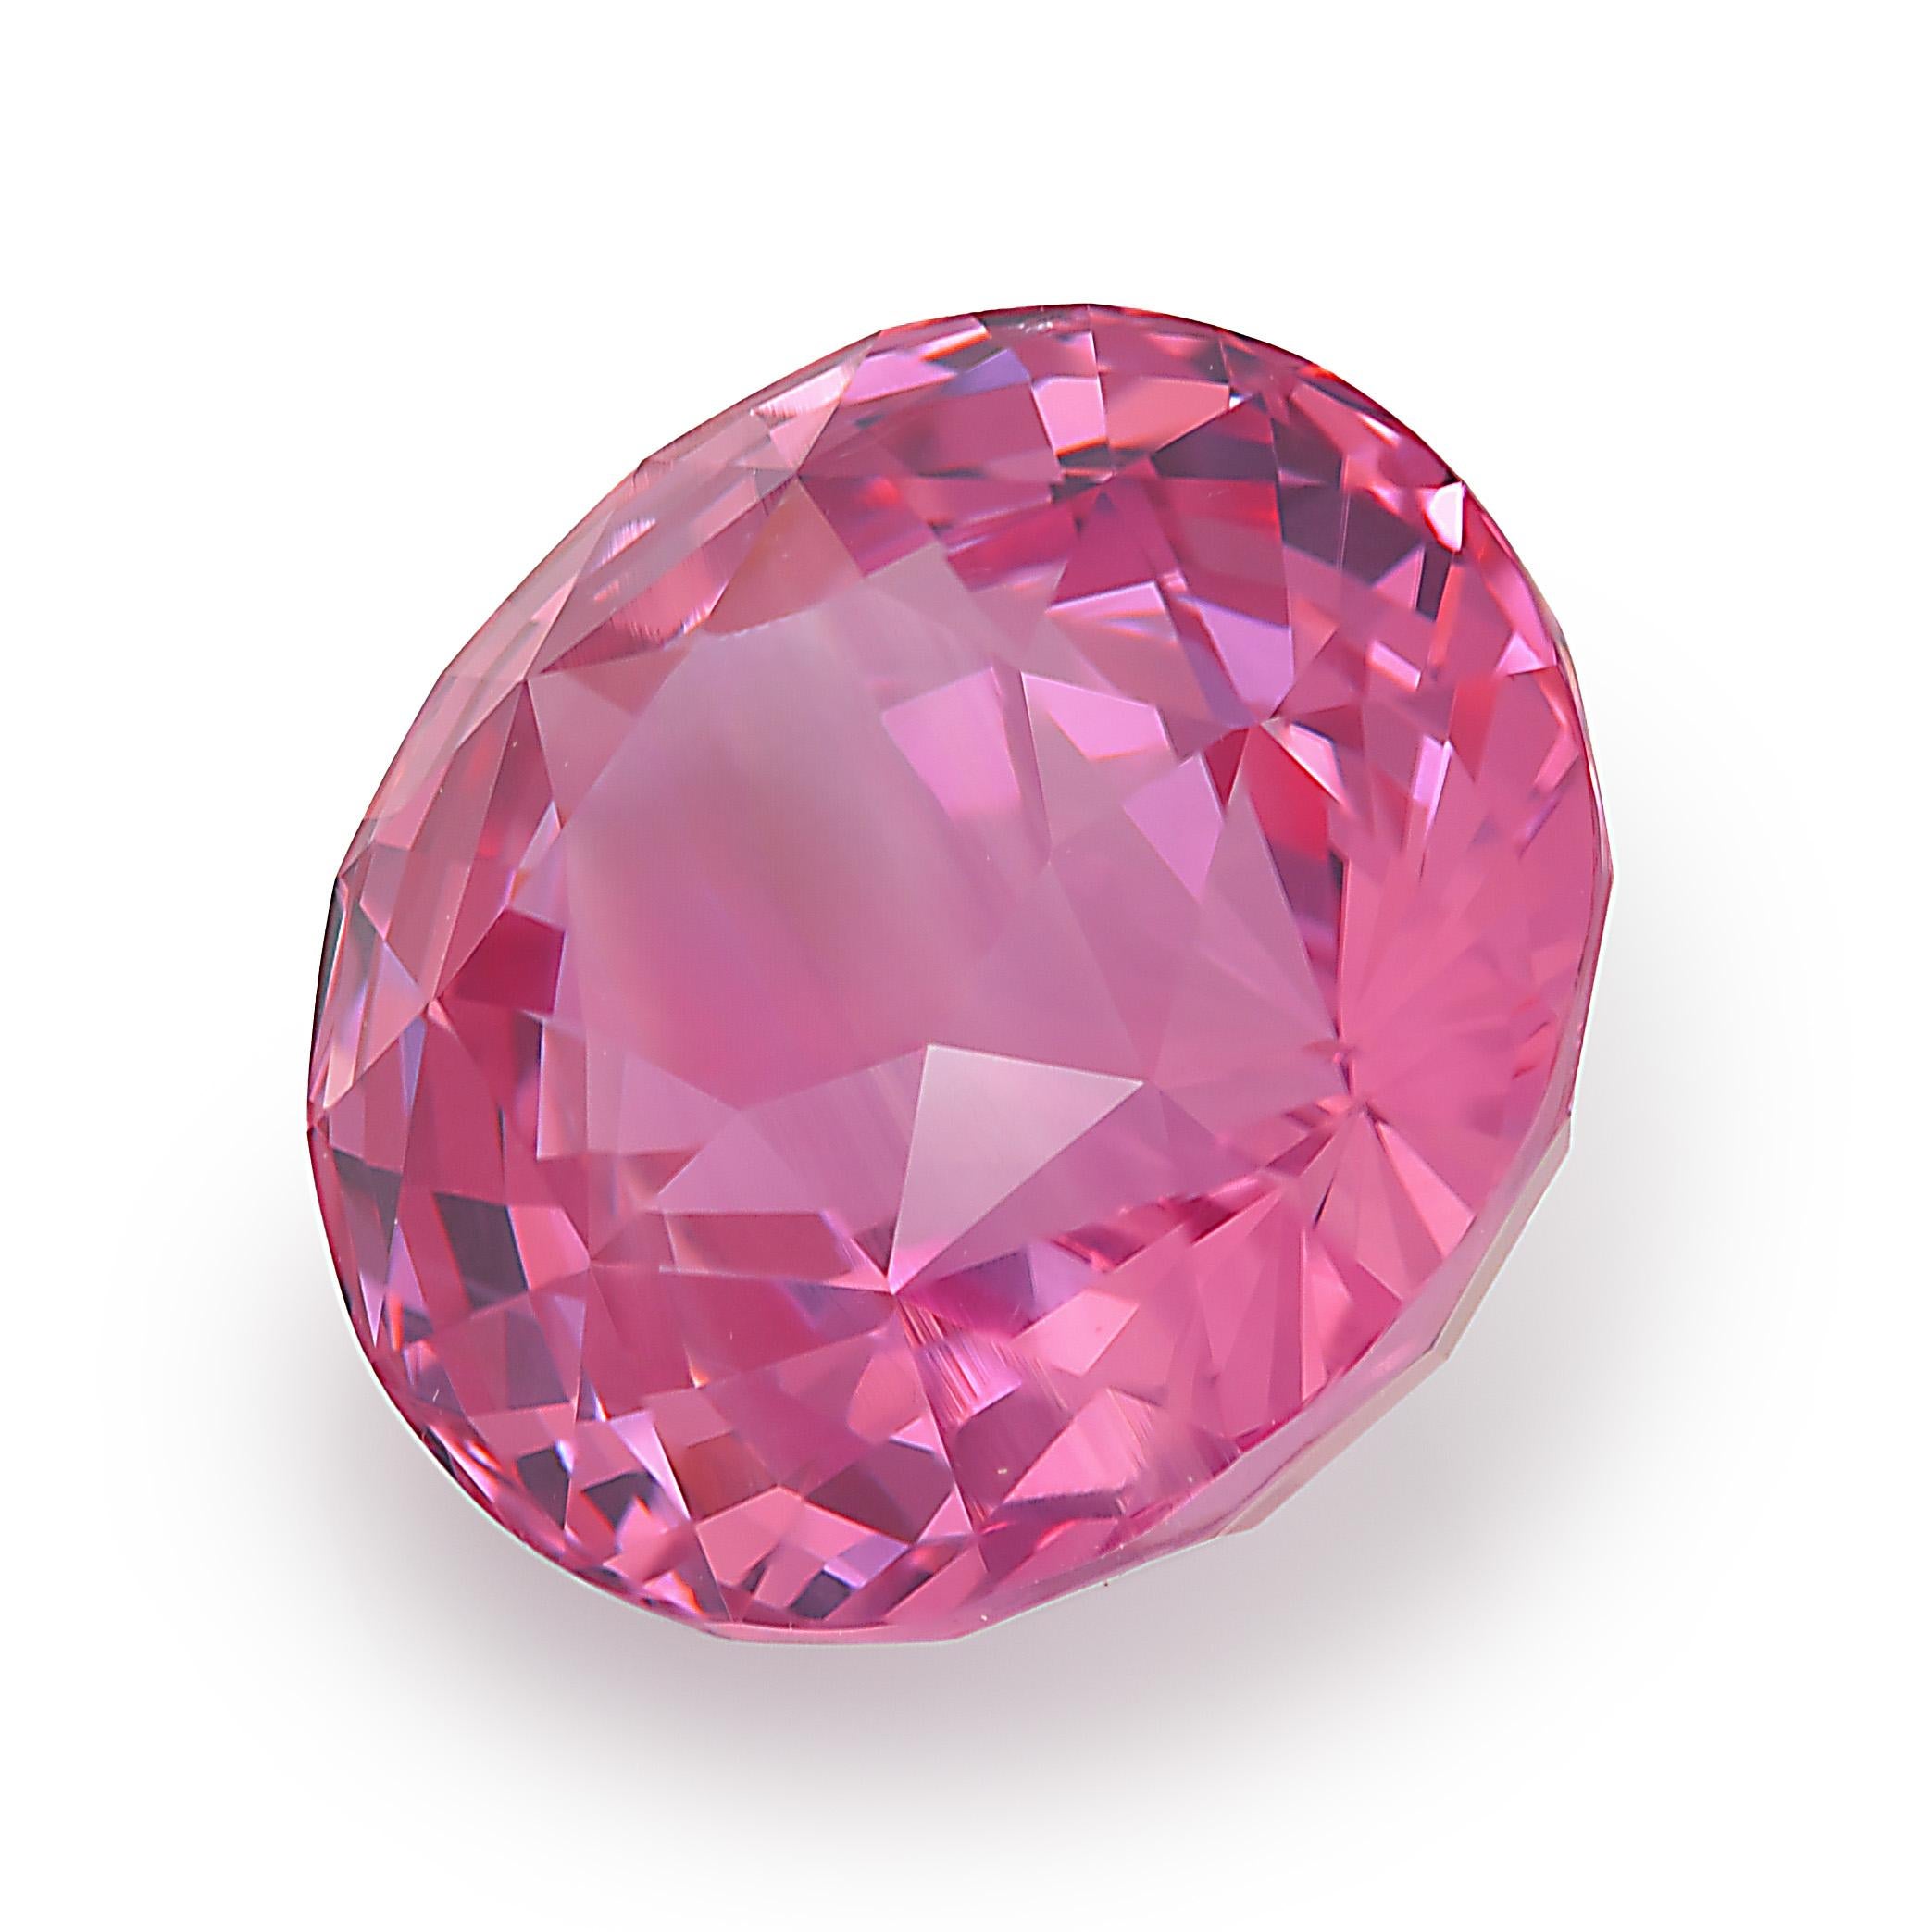 Mixed Cut GIA Certified 8.50 Carats Natural Pink Sapphire